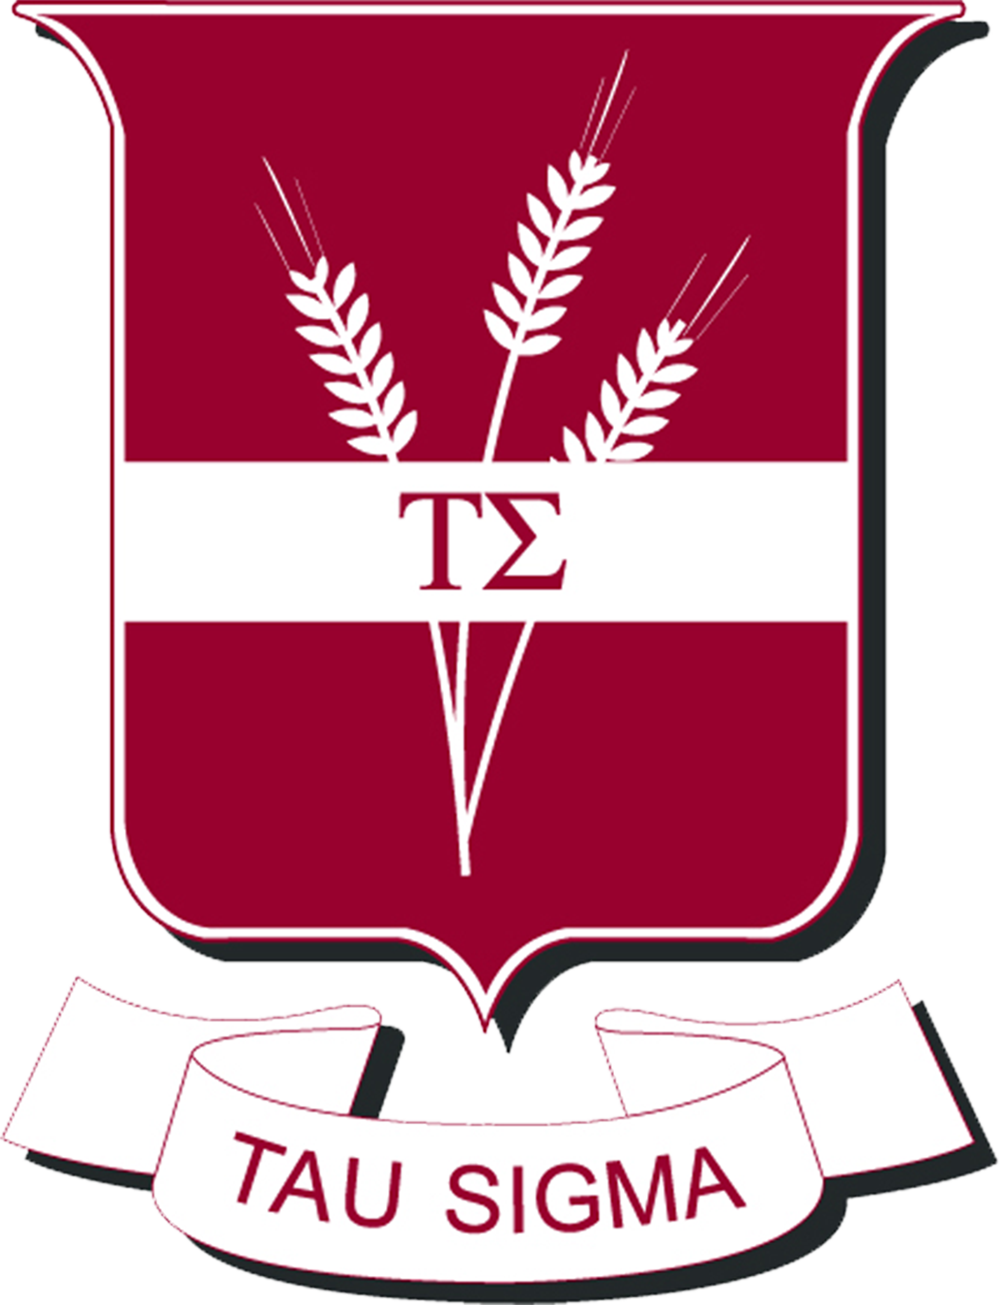 Tau Sigma National Honor Society logo